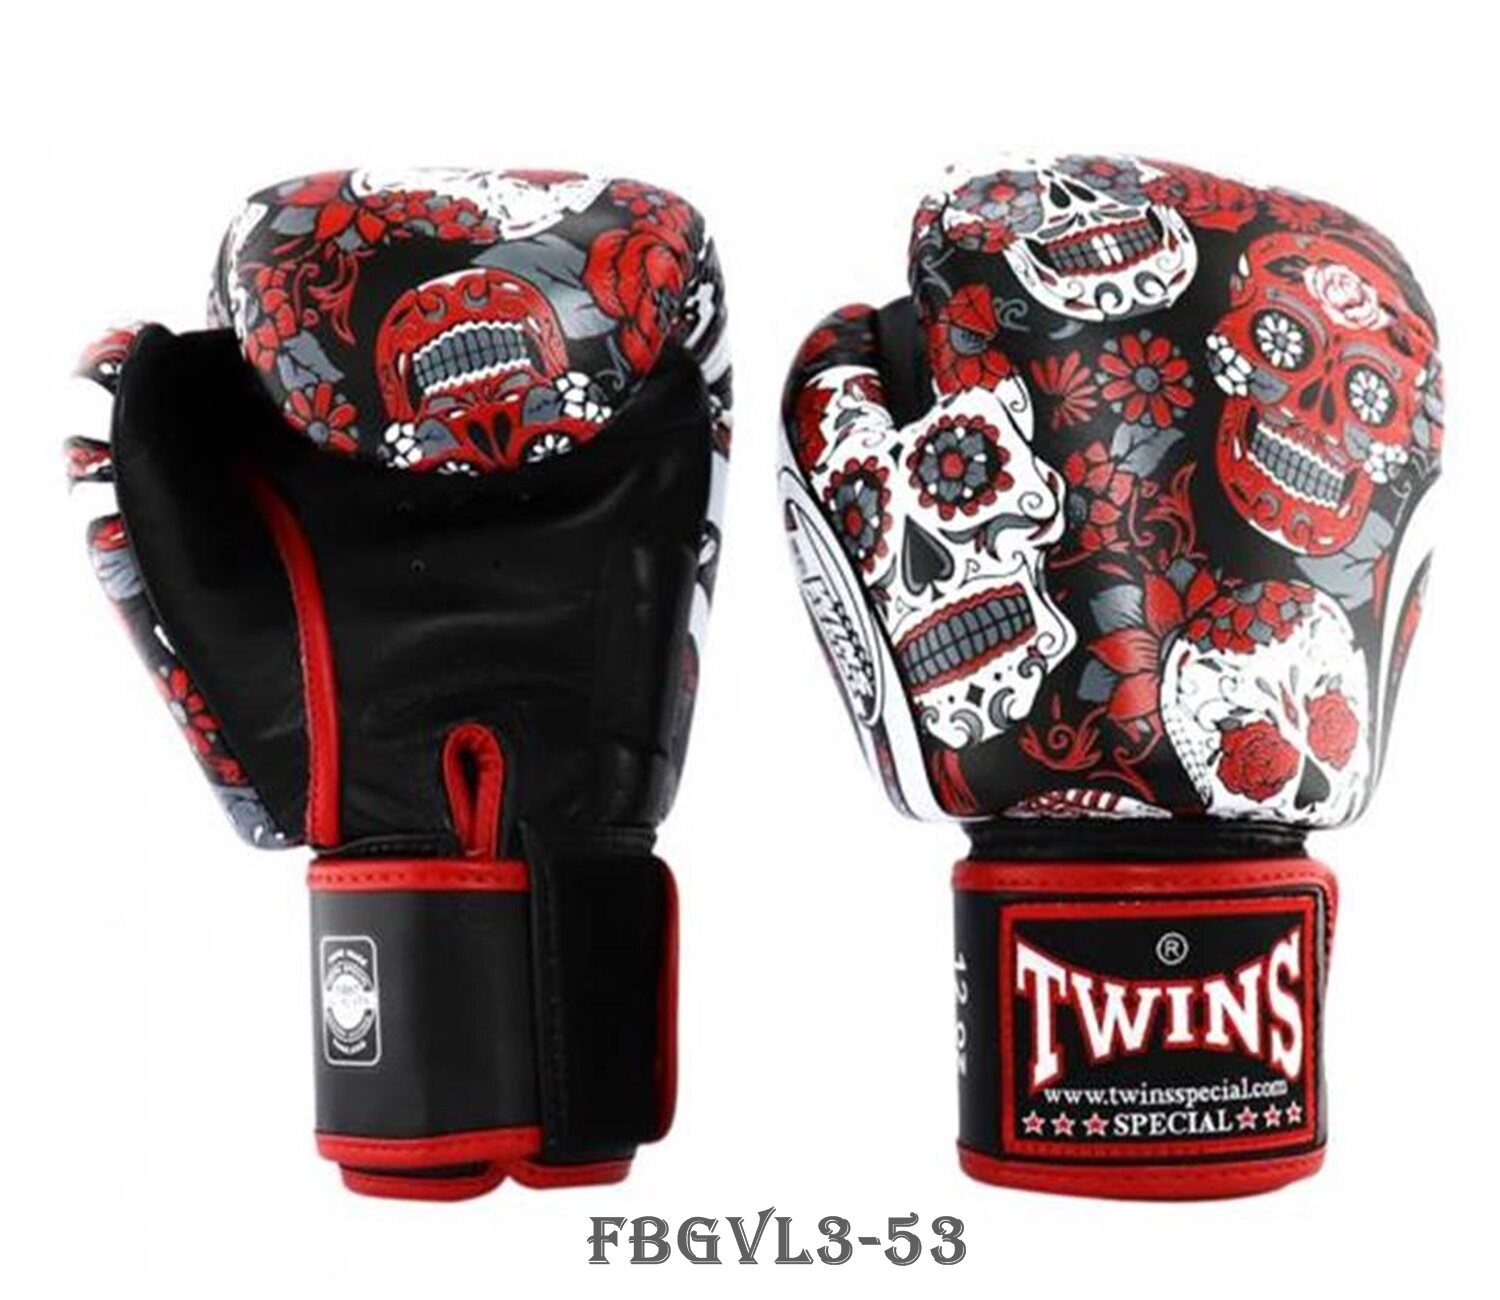 Twins special Boxing Gloves Fancy FBGVL3-53 8,10,12,14,16 oz Red-Black Muay Thai Sparring MMA K1 นวมซ้อมชกทวินส์ สเปเชี่ยล แฟนซี แดง ดำ หนังแท้ 100%